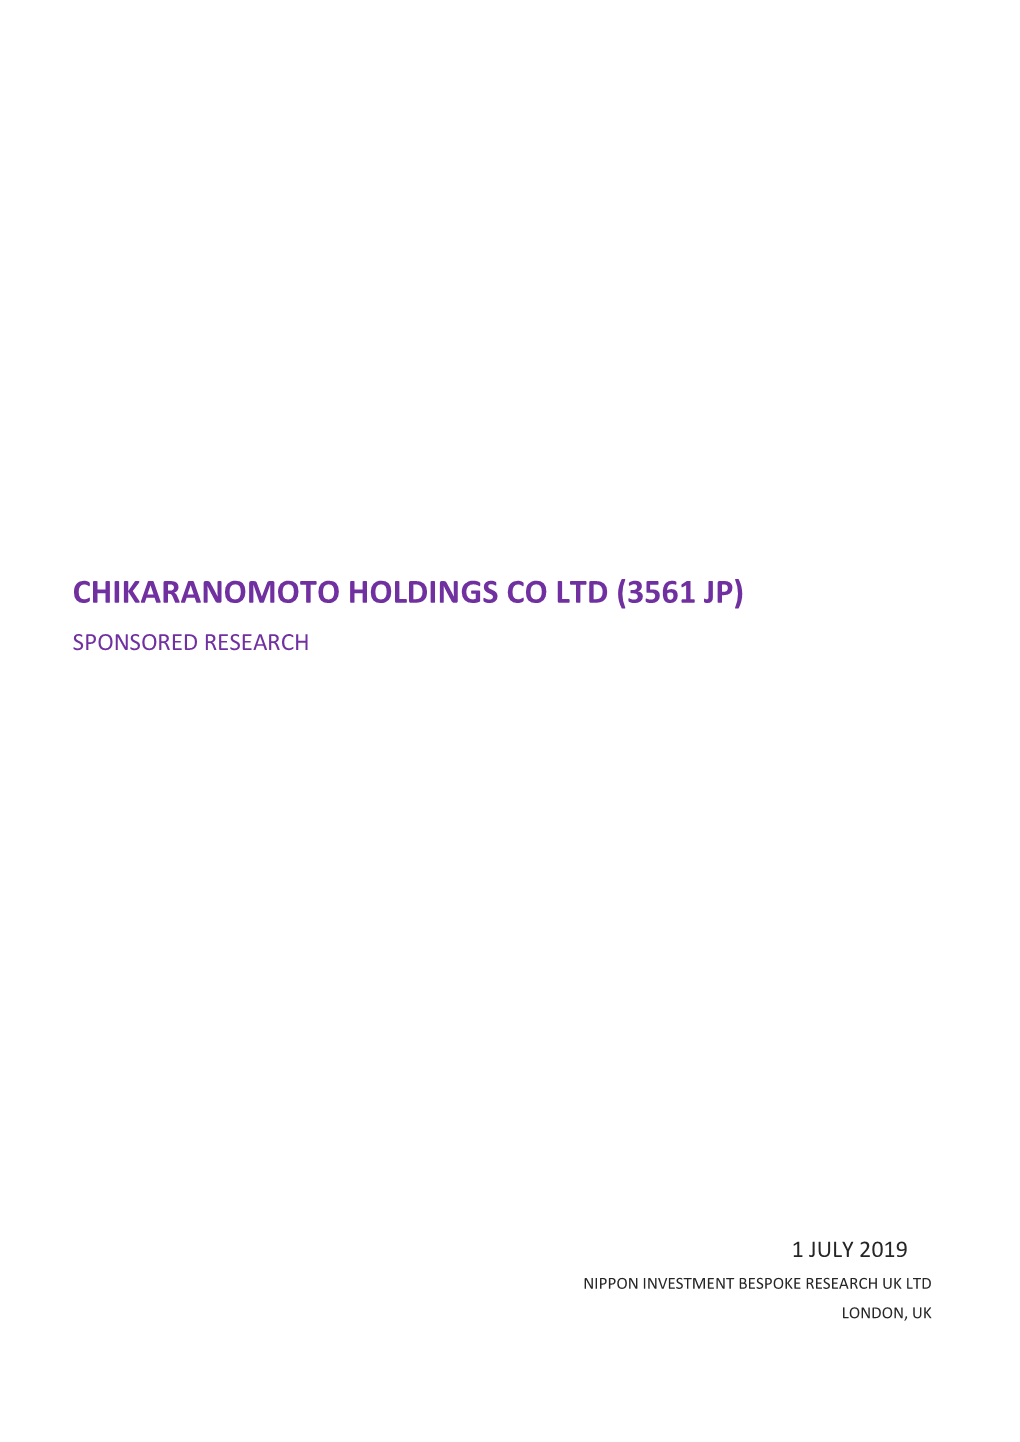 Chikaranomoto Holdings Co Ltd (3561 Jp) Sponsored Research